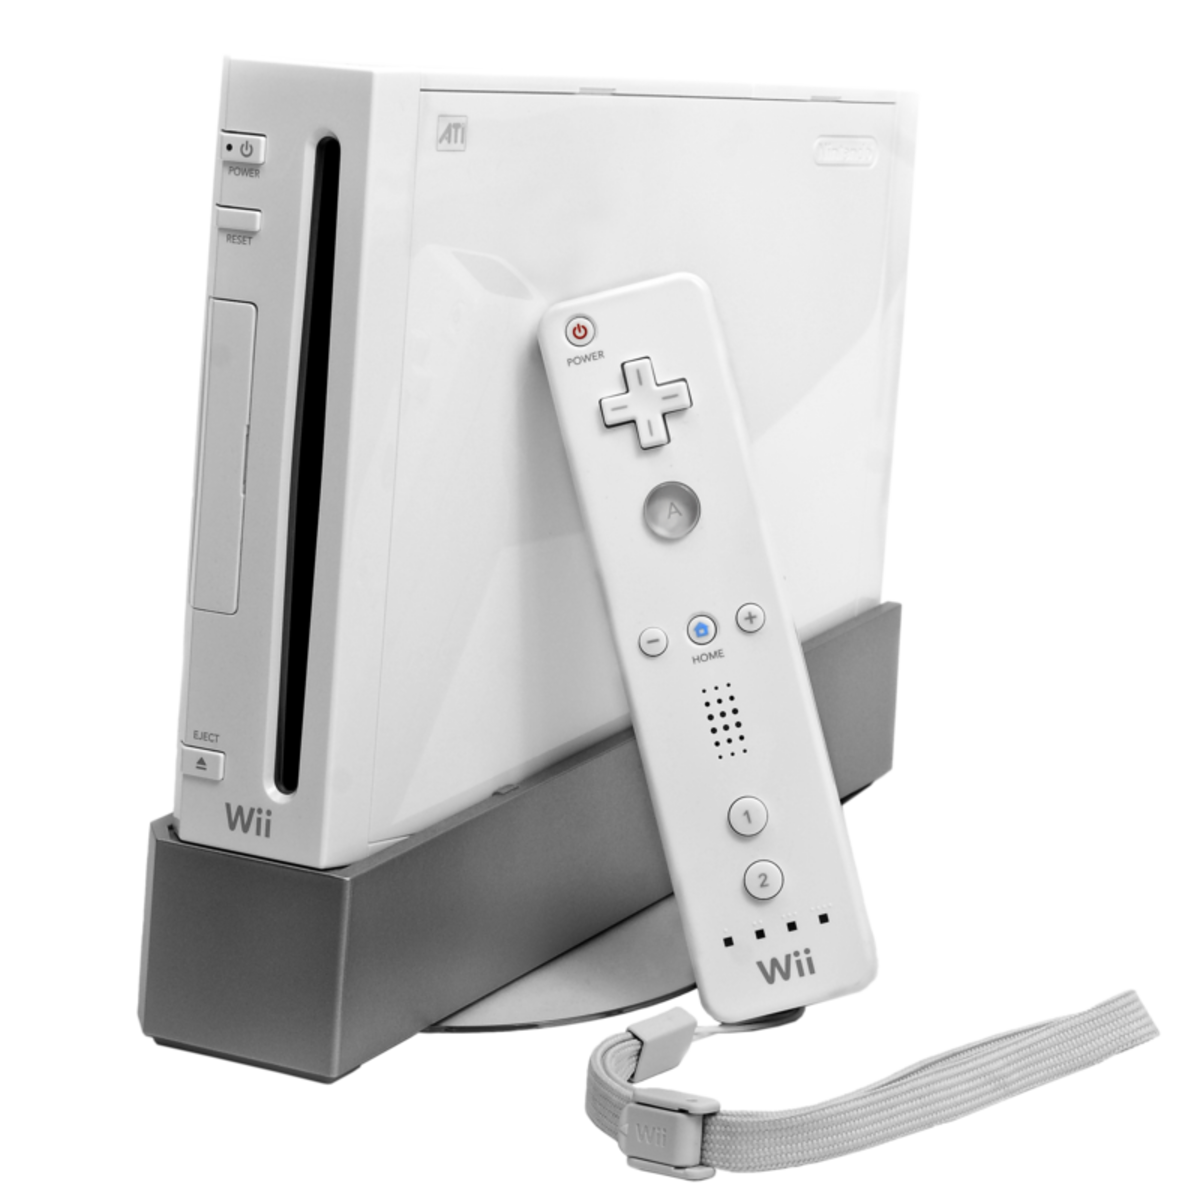 The Nintendo Wii